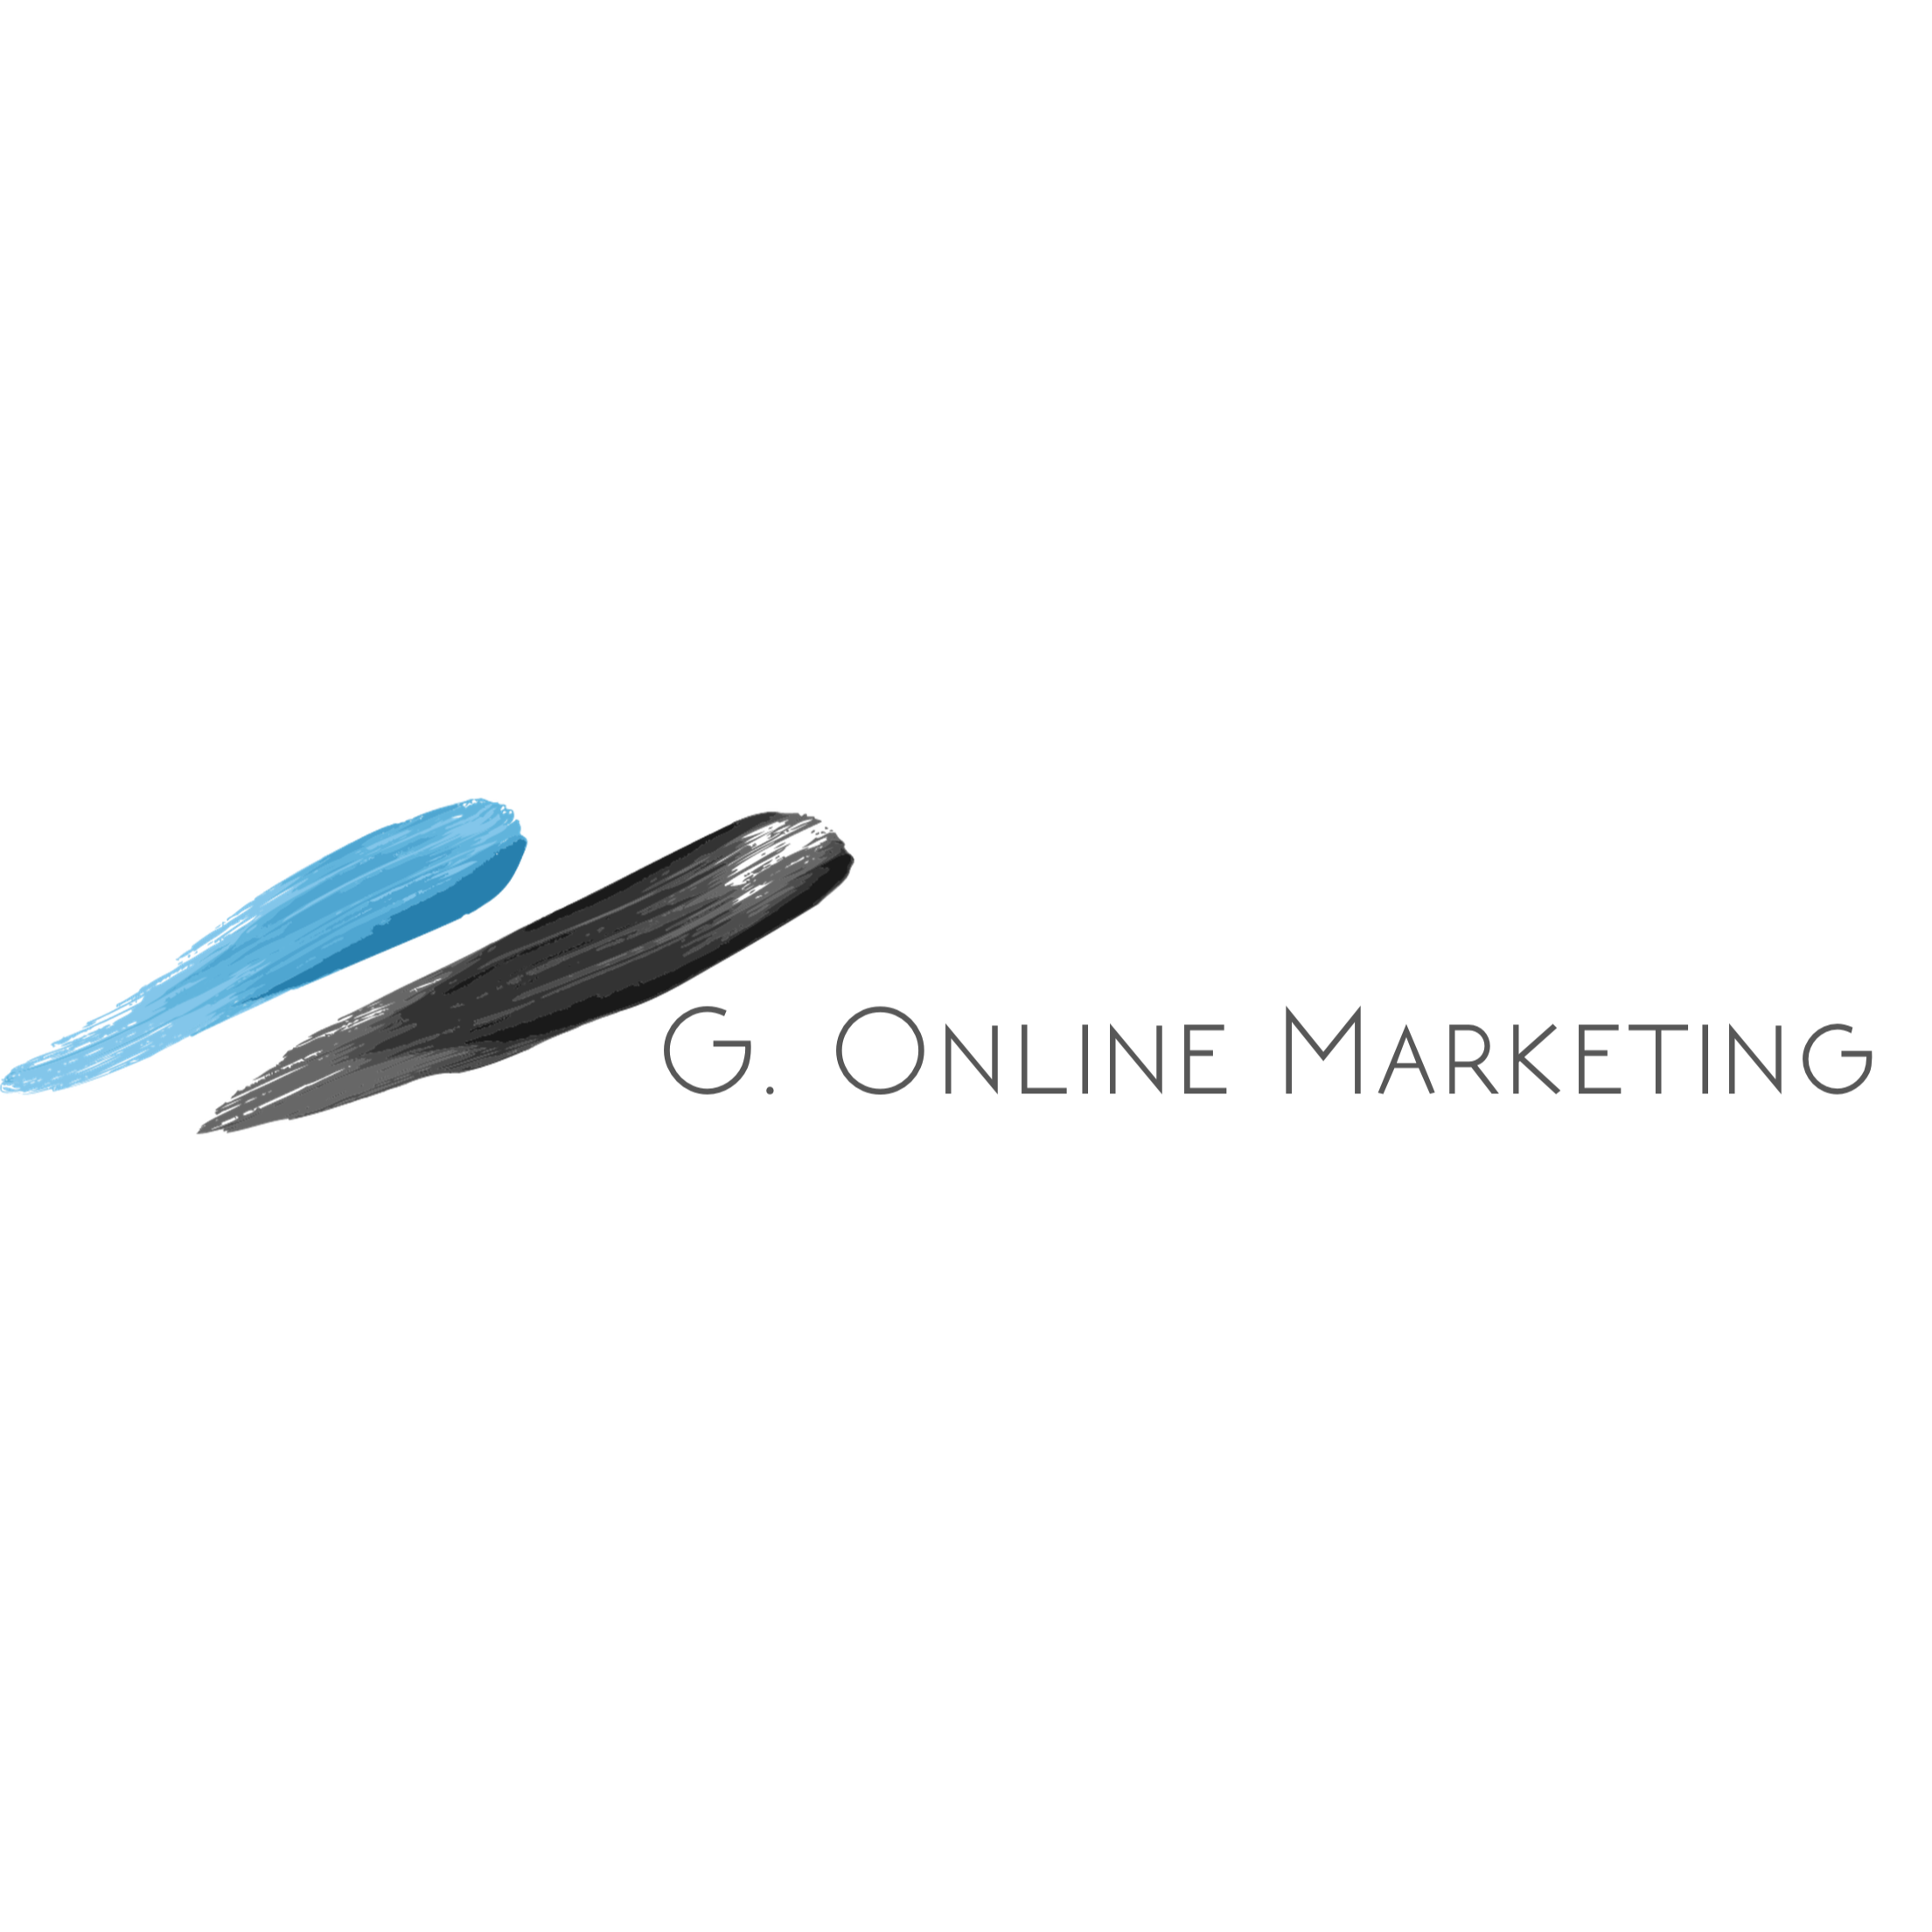 G. Online Marketing Logo